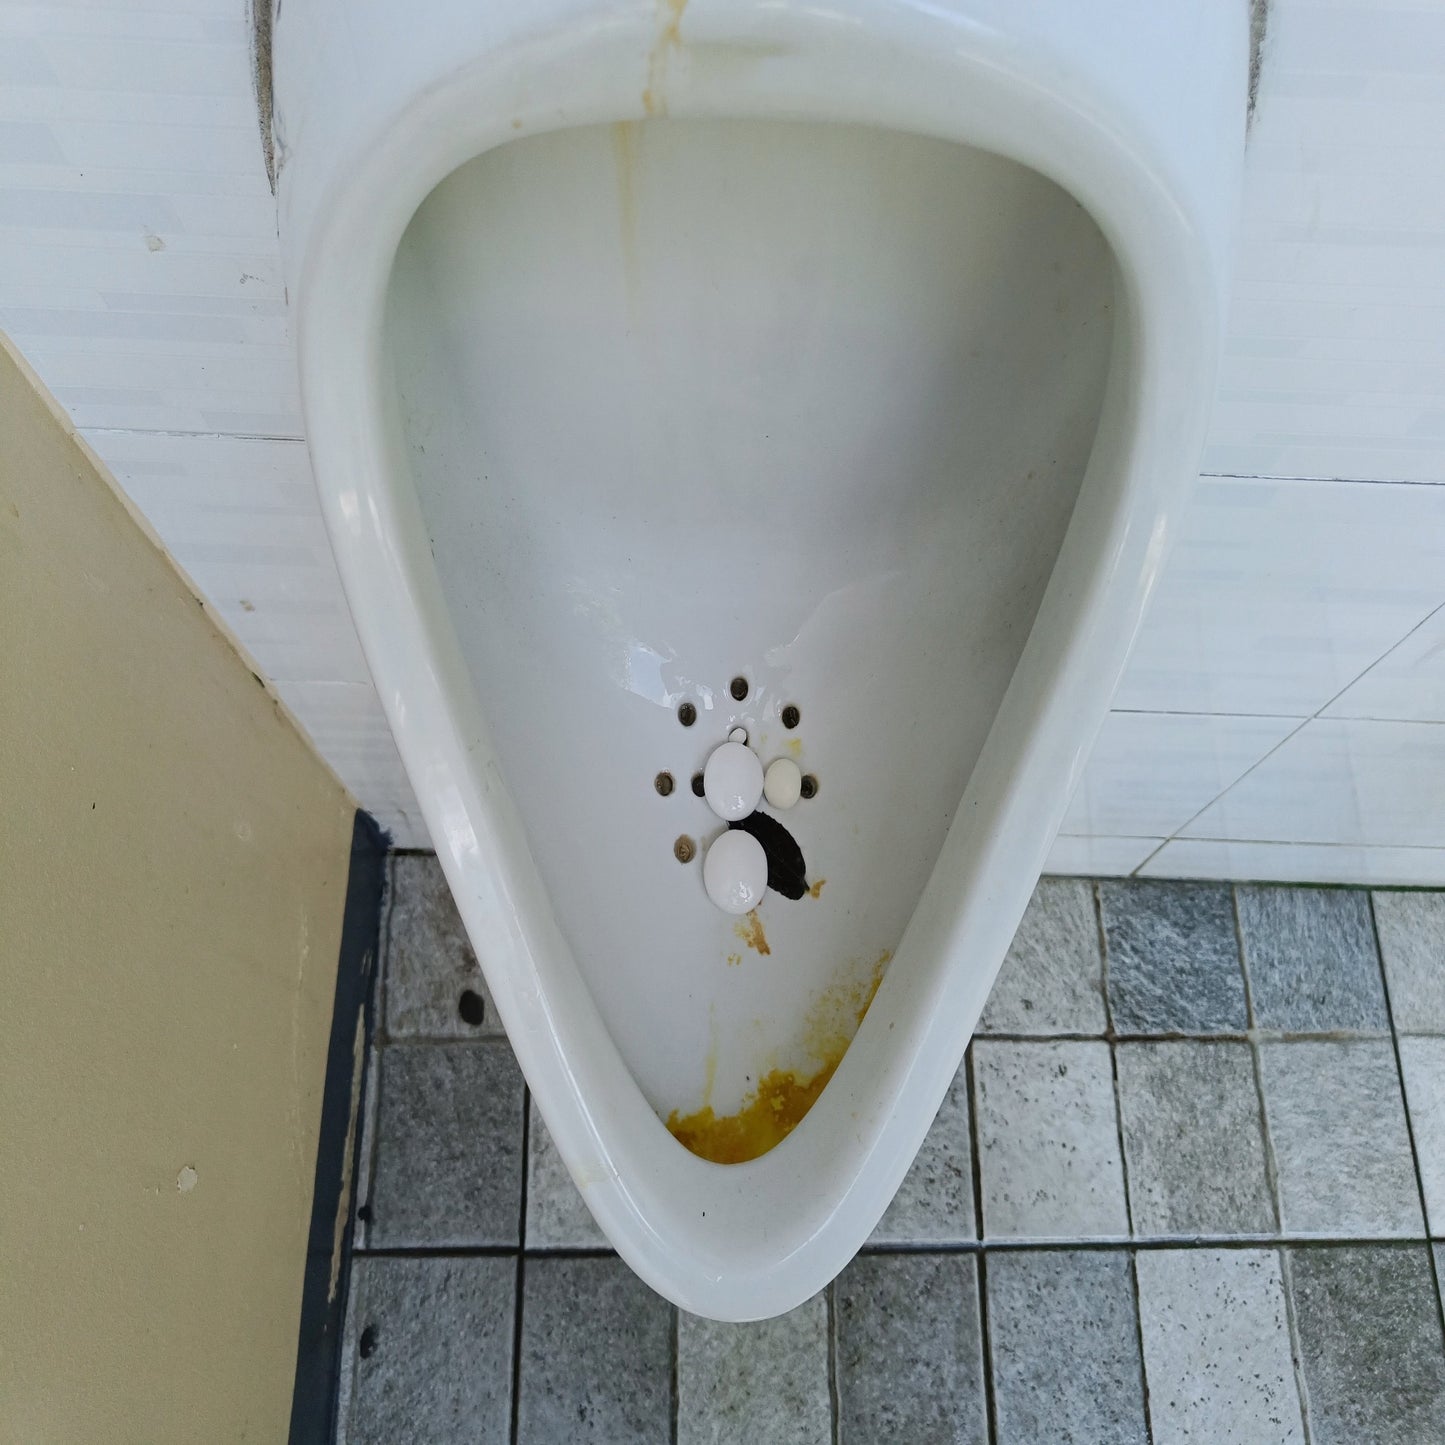 Resolv :: Deka Disincrostante Tartaro Urina Anticalcare Cassette WC/Sanitari